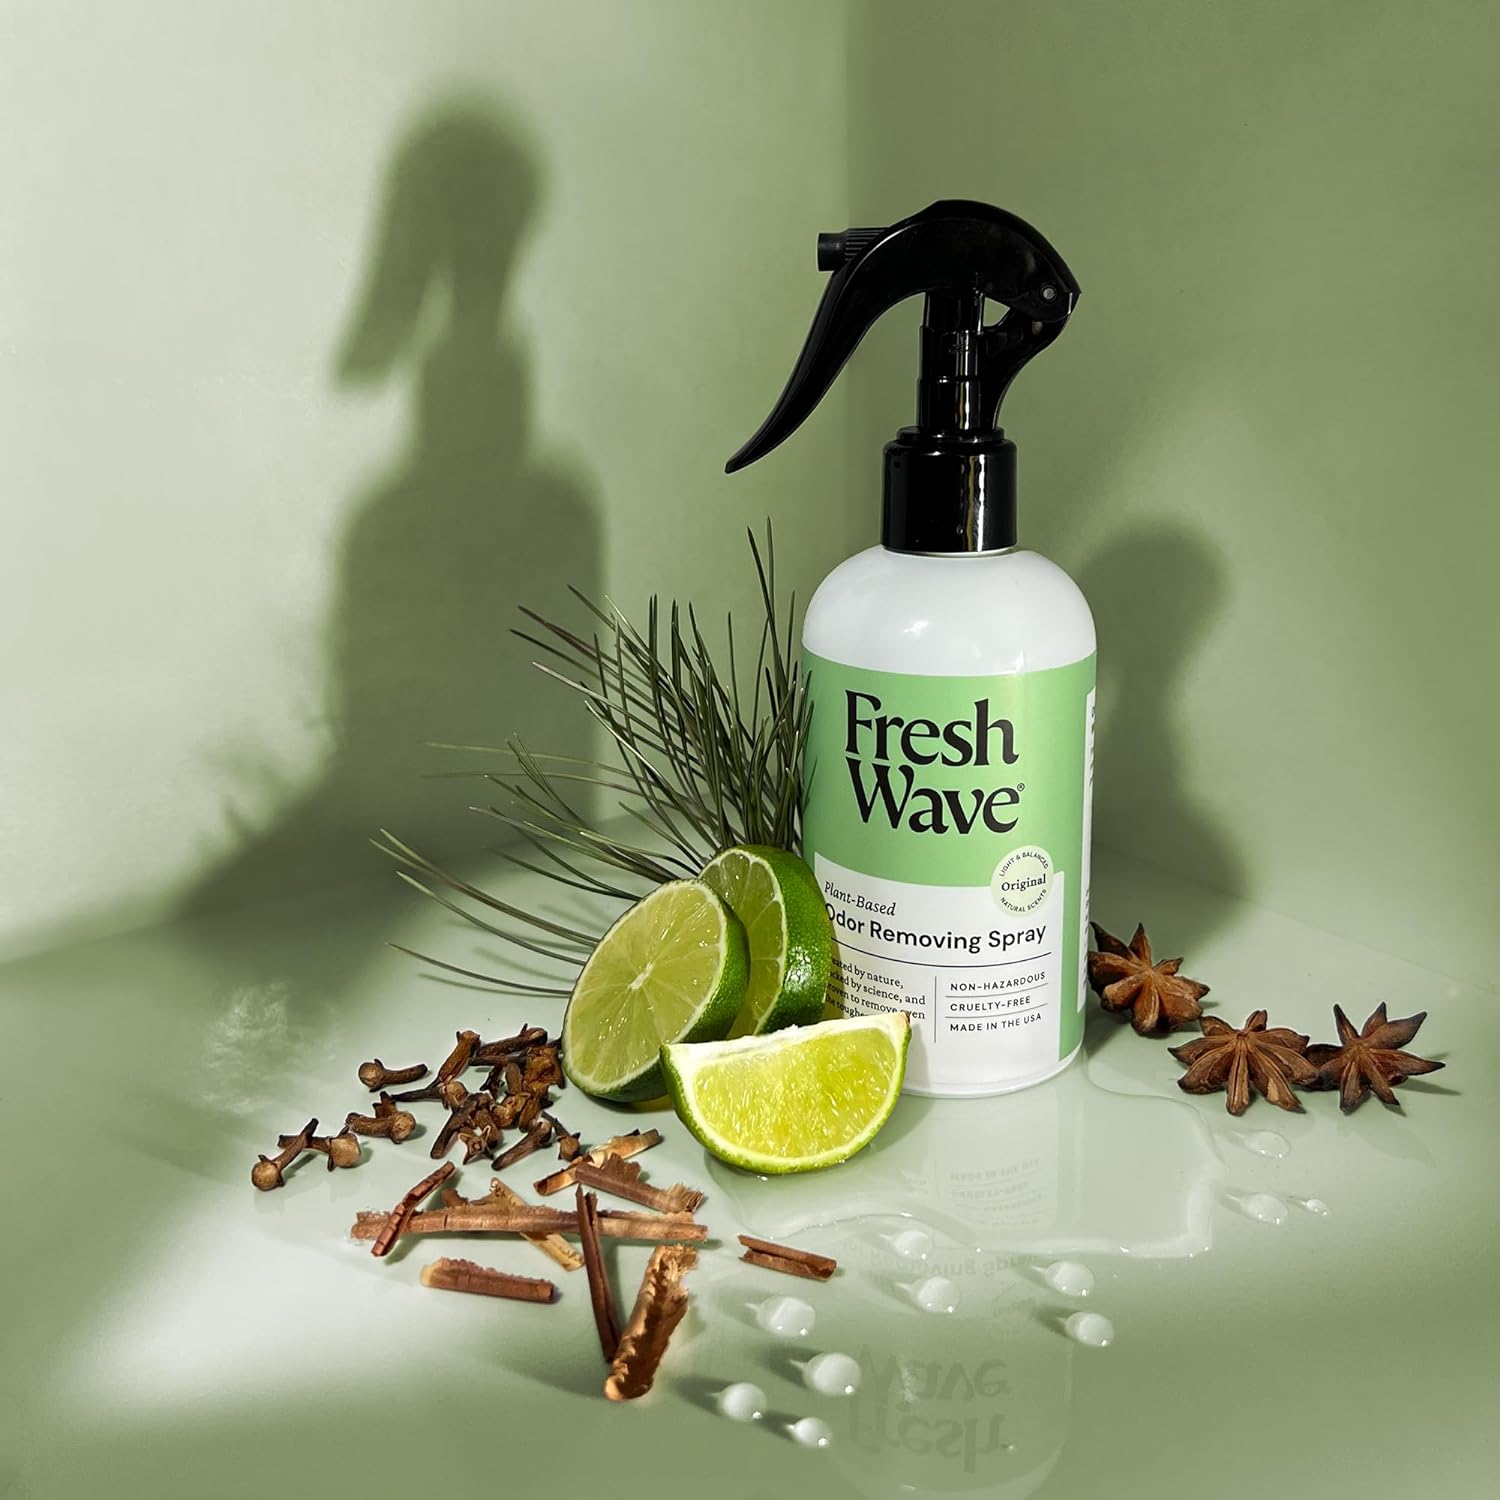 Fresh Wave Odor Eliminator Spray & Air Freshener, 8 fl. oz., Natural Ingredients : Health & Household